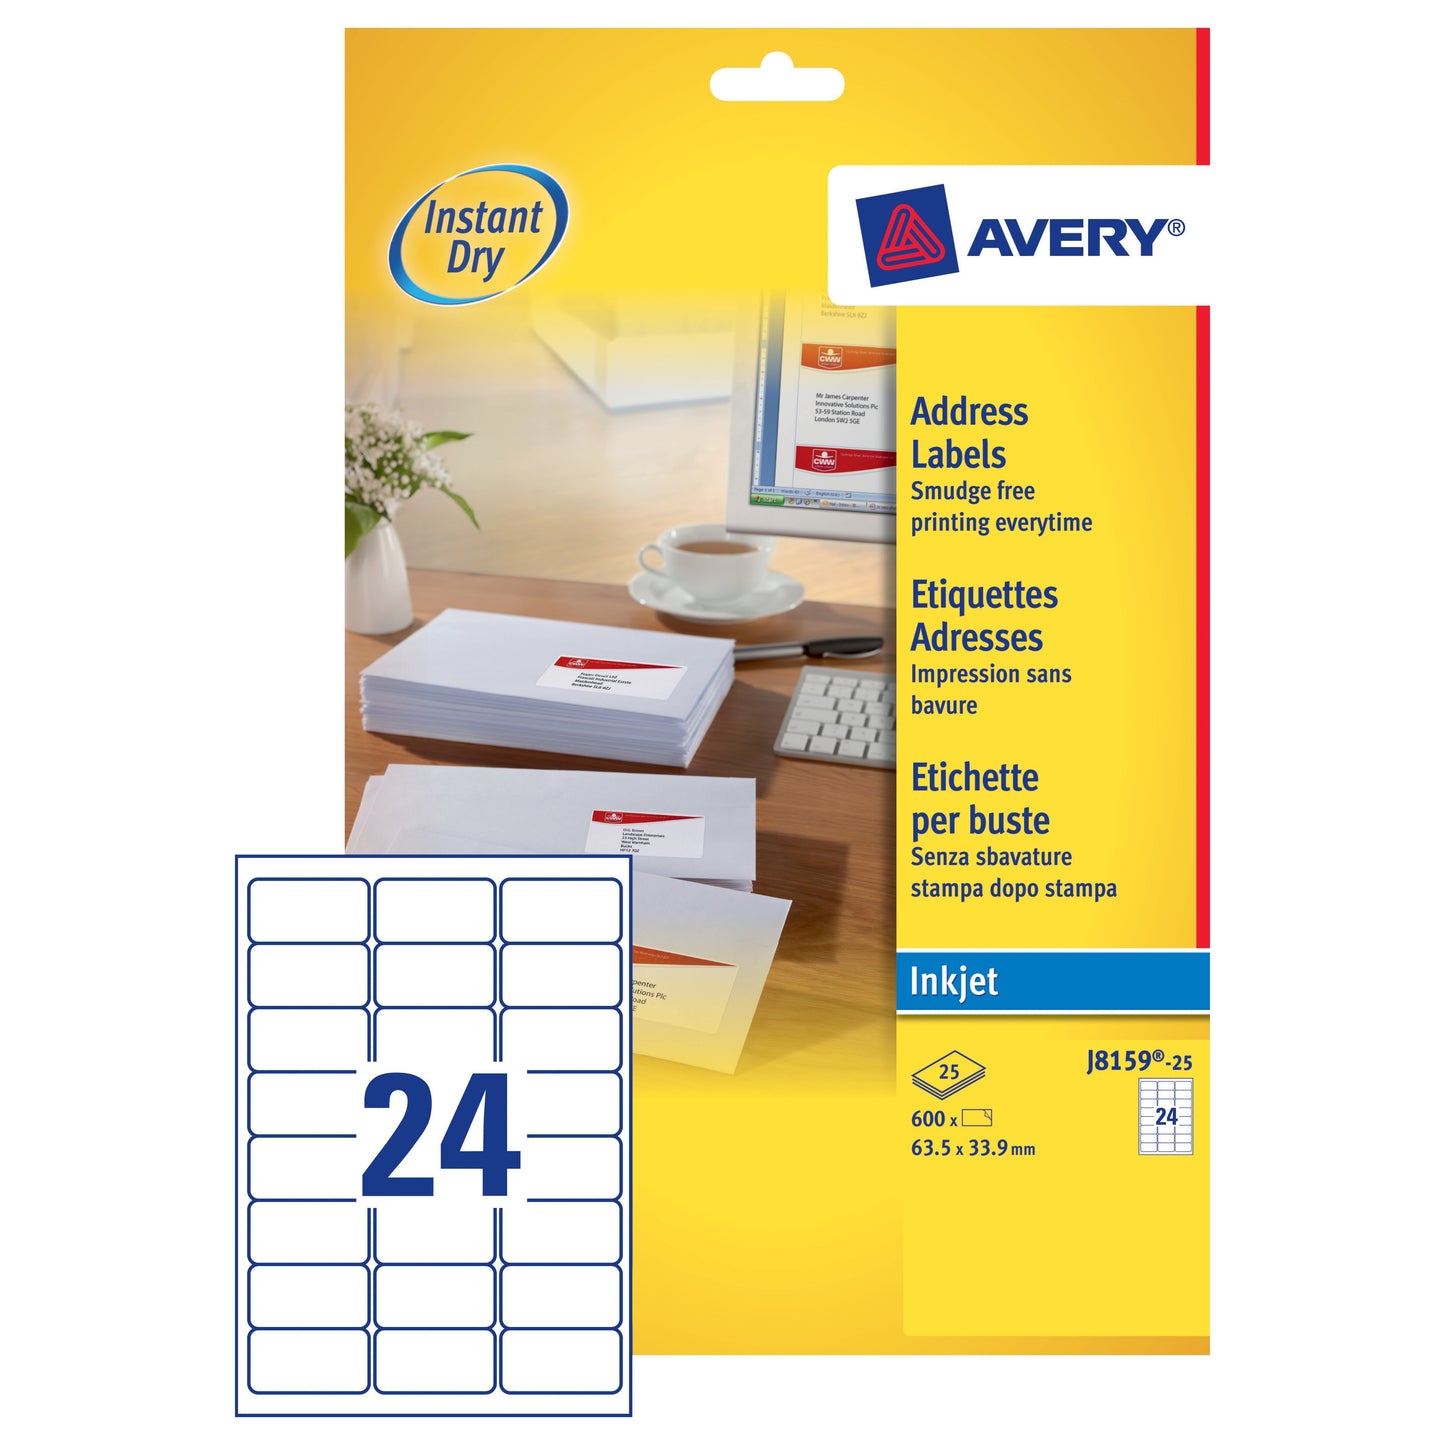 Avery Inkjet Address Label 63.5x33.9 White (25) J8159